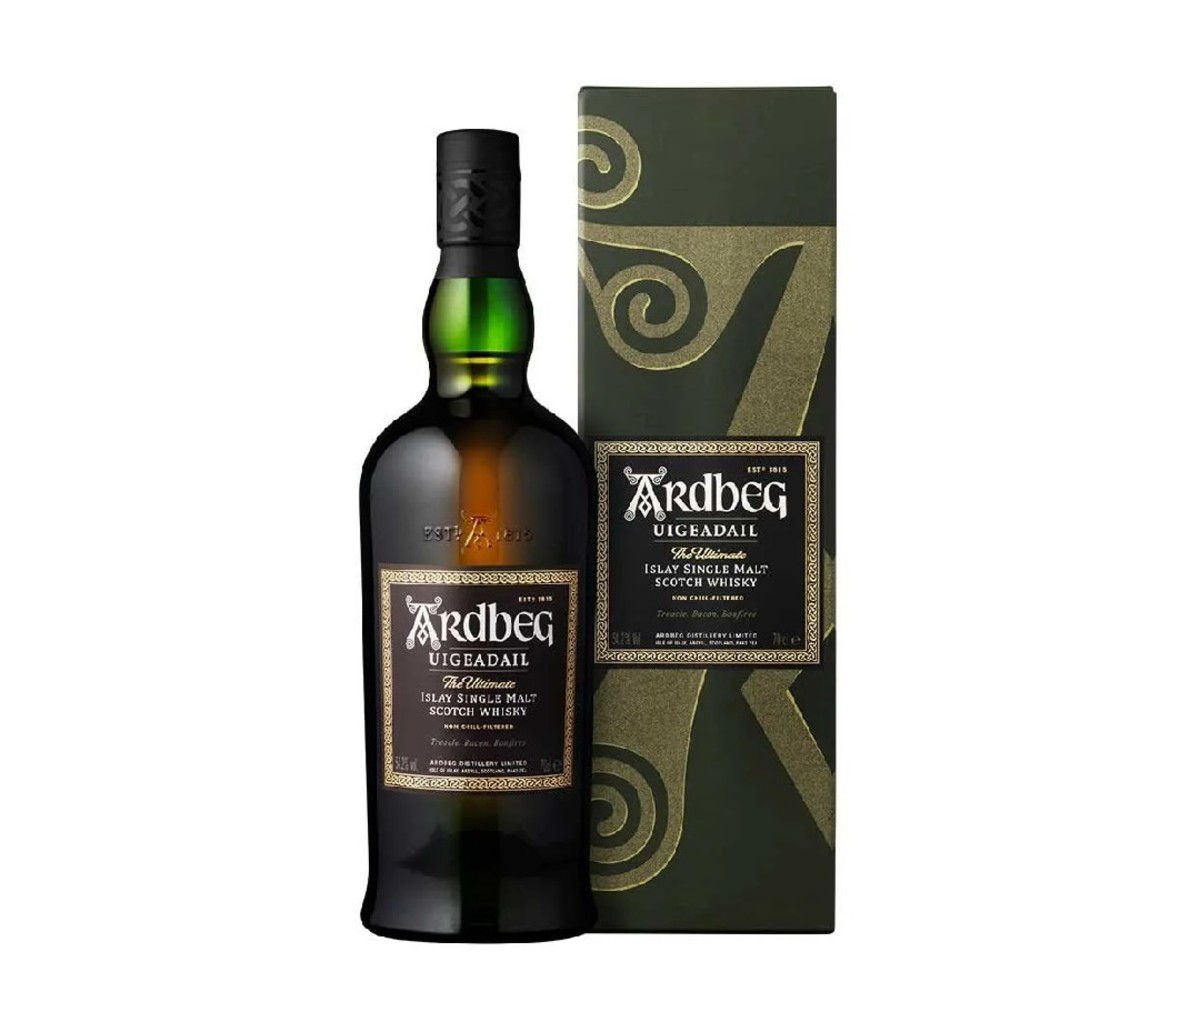 A bottle of Ardbeg Uigeadail Single Malt Scotch Whisky.